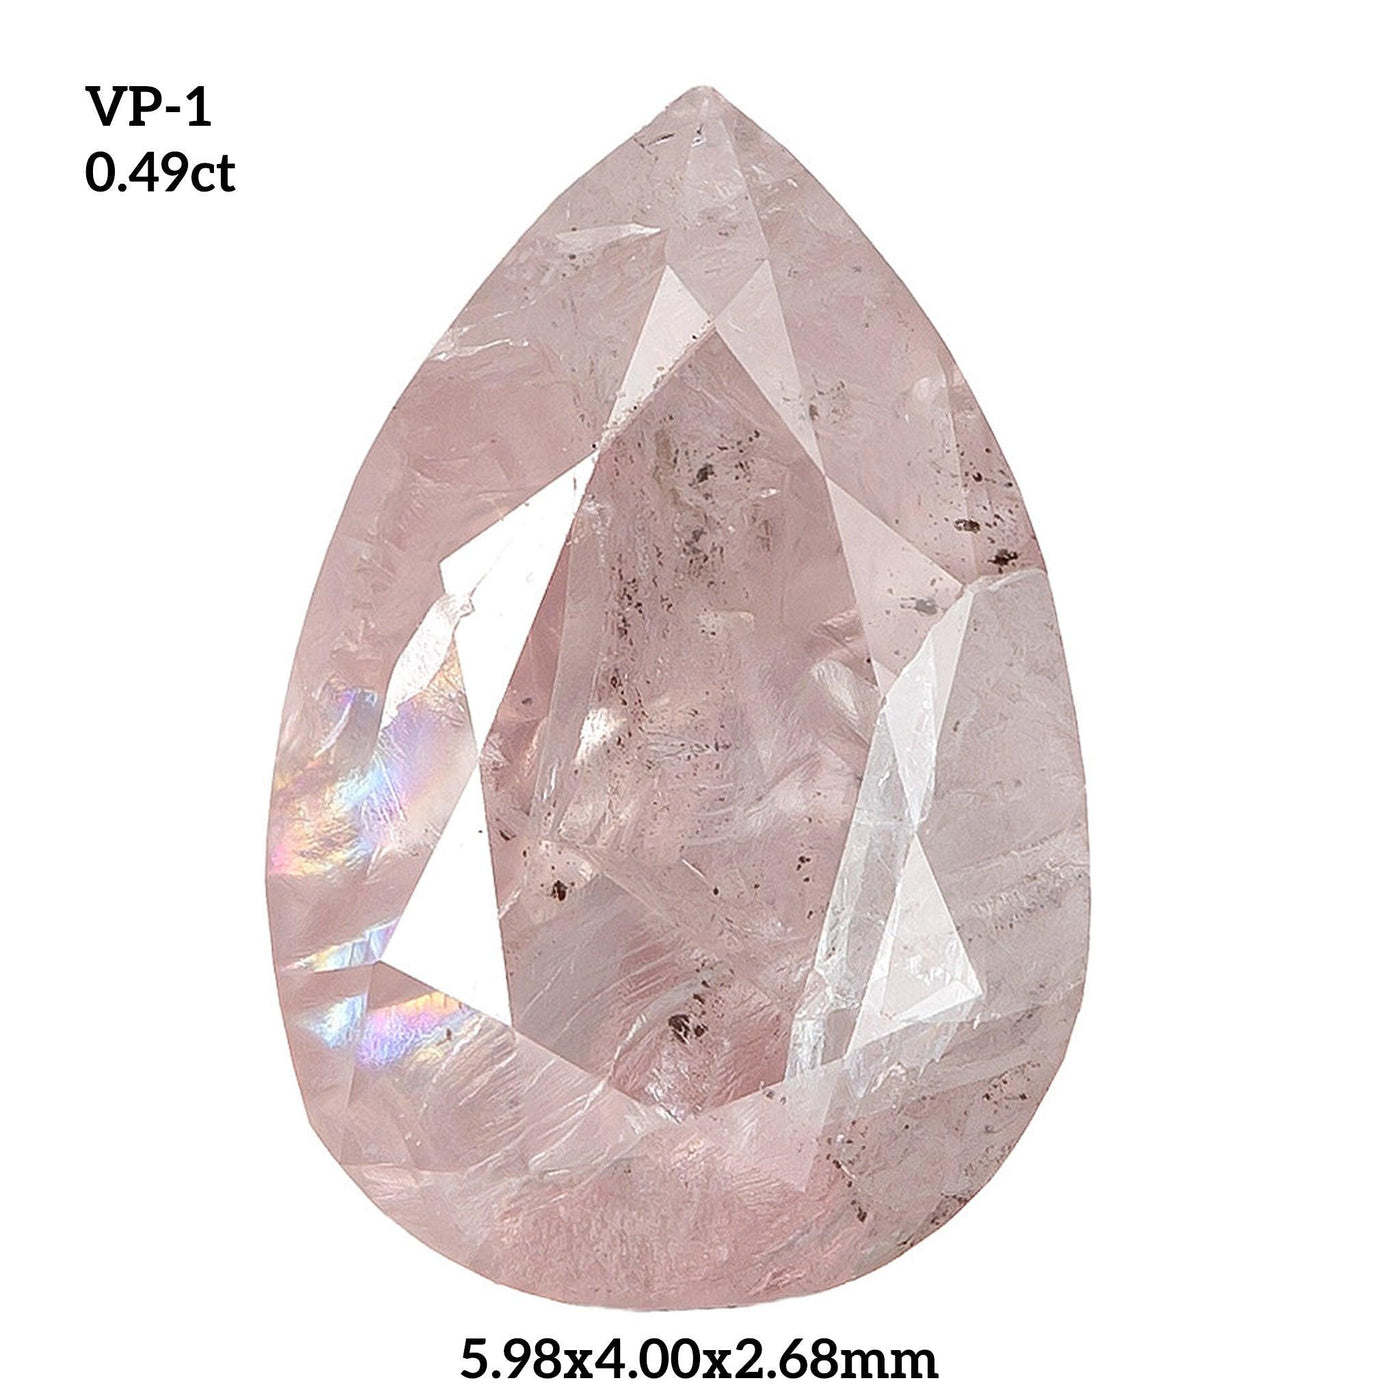 VP1 - Vivid pink pear diamond